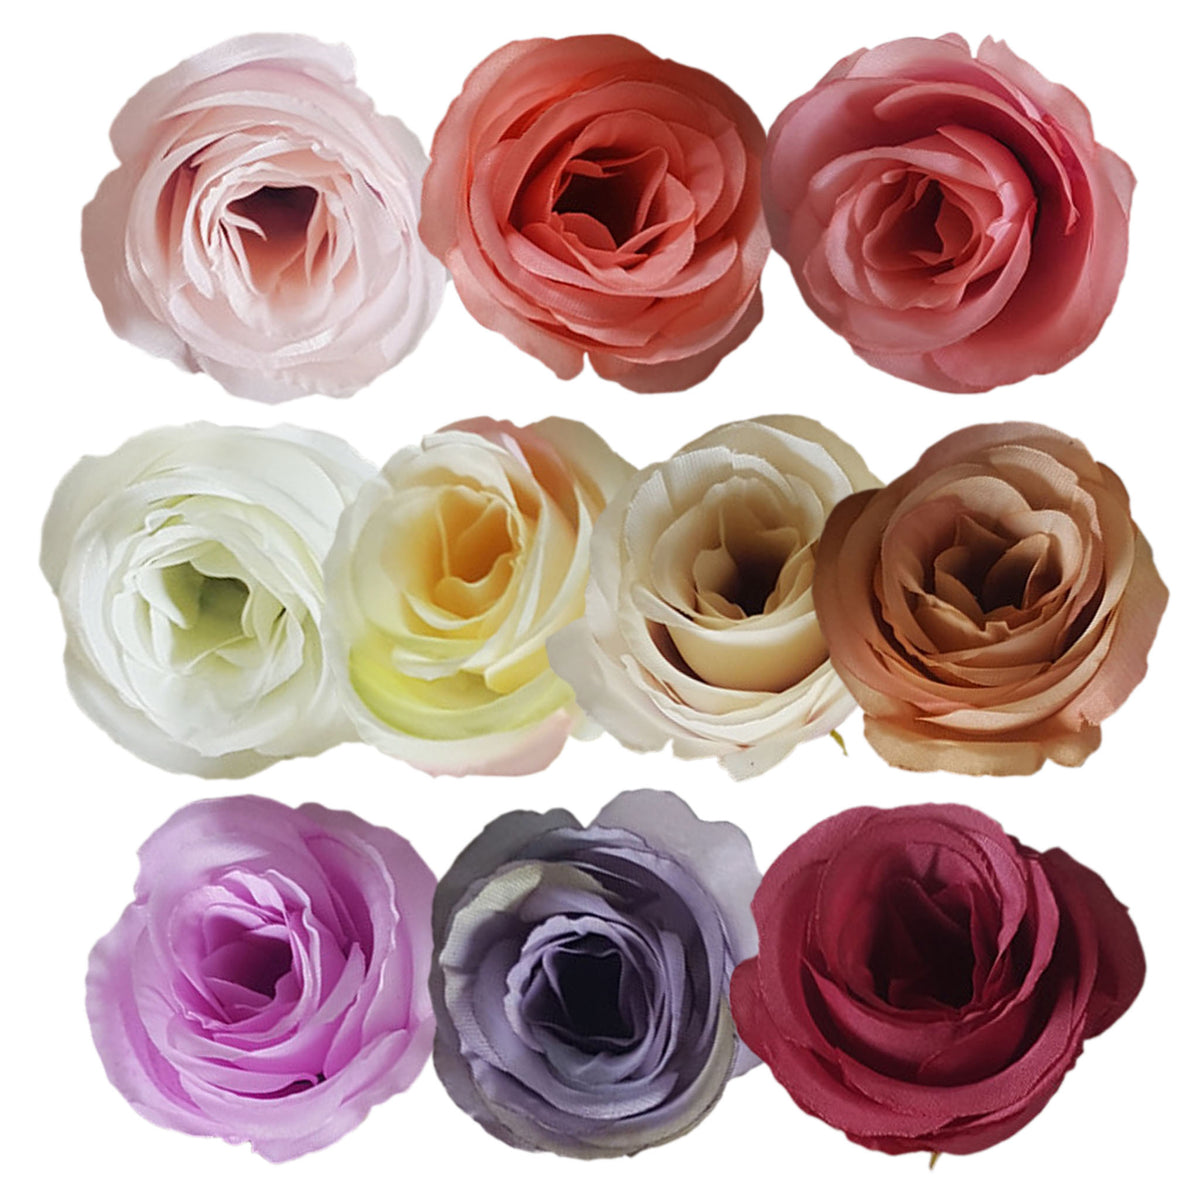 10/20P Artificial Silk Flower Head Tiny Rose For DIY Crafts